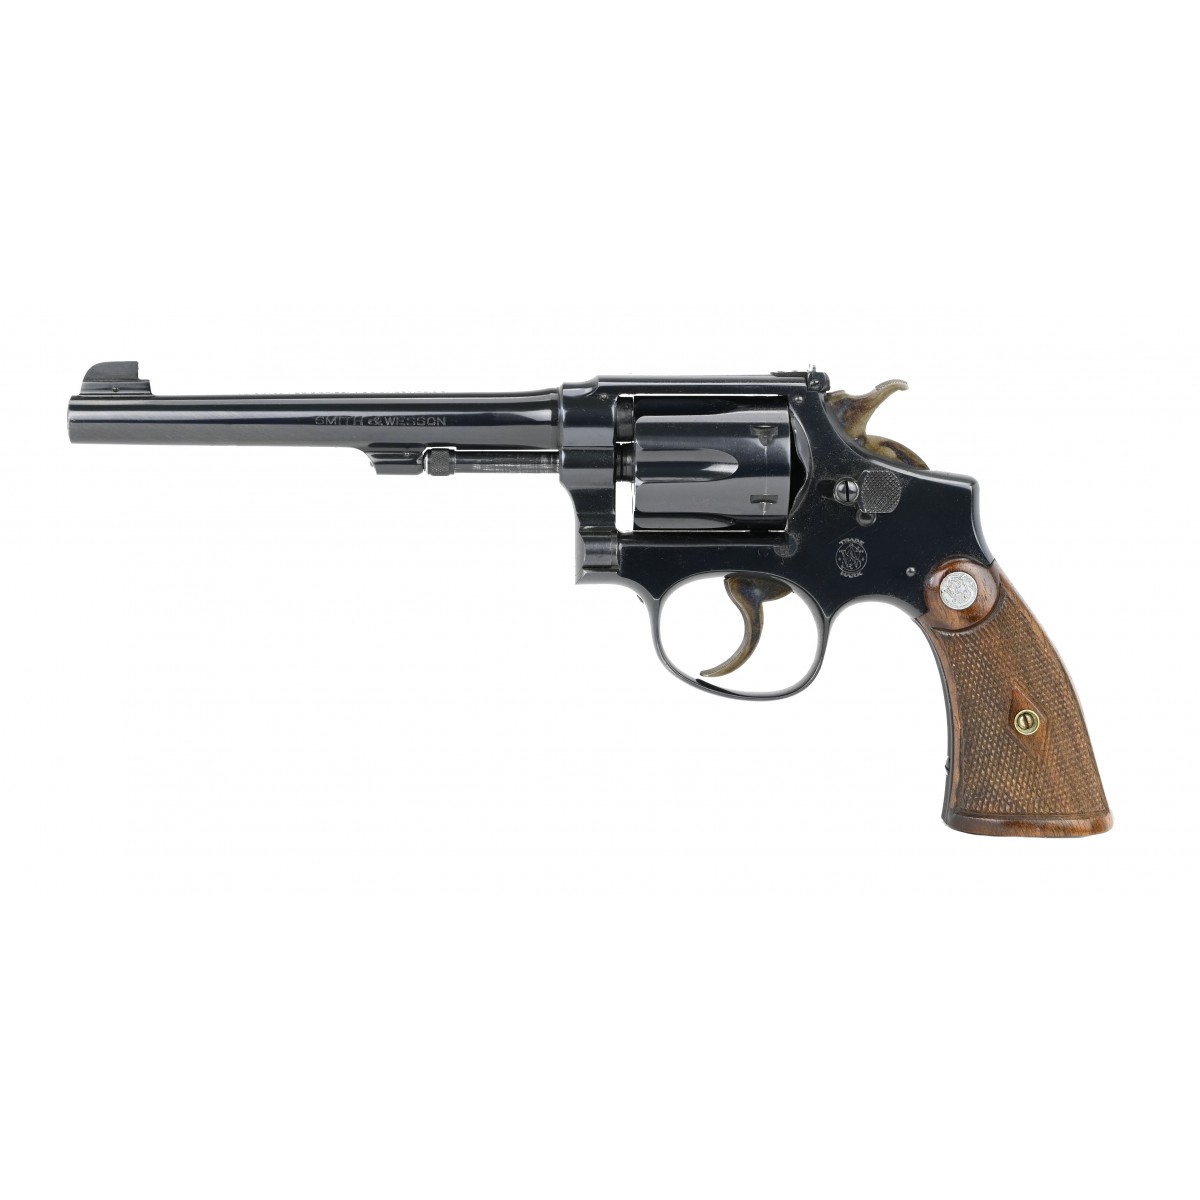 Smith & Wesson K22 Outdoorsman .22 LR caliber revolver for sale.